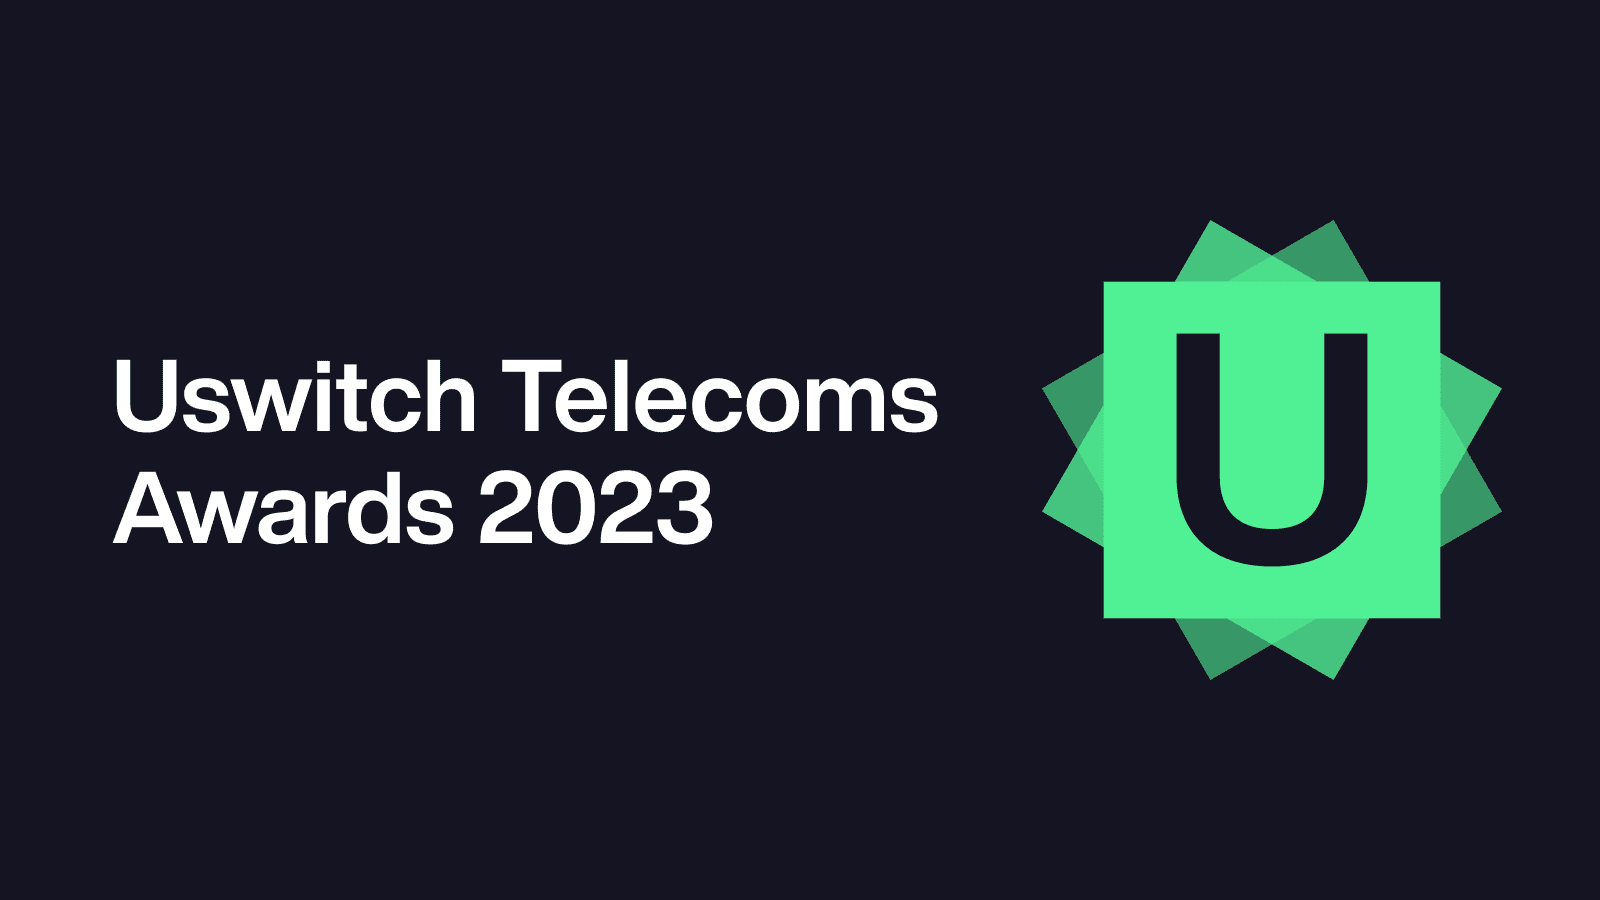 Uswitch telecoms awards 2023